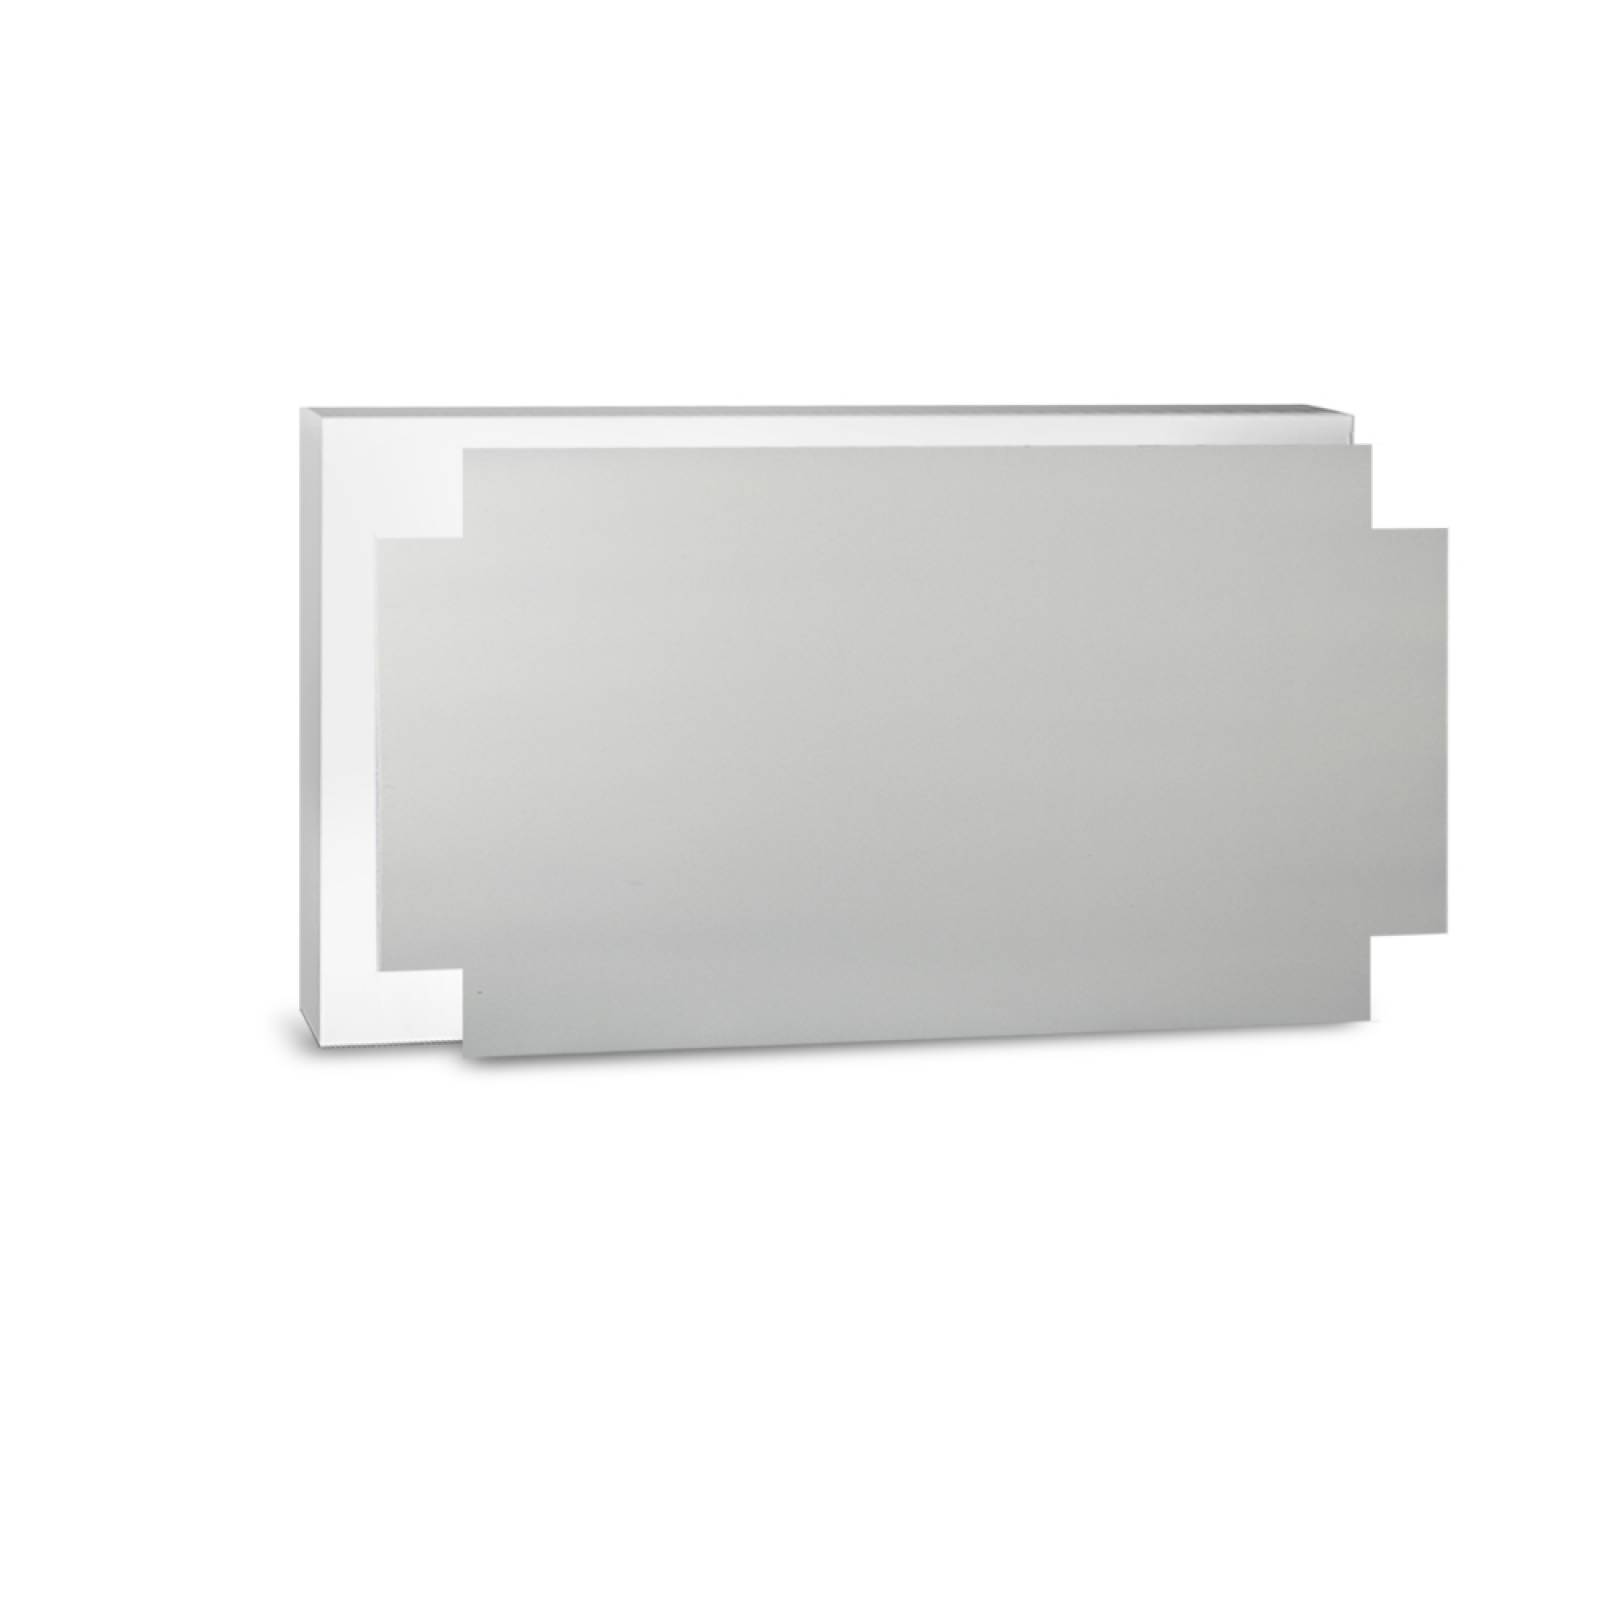 Aislante Cerámico Protector Térmico para Pared de 52 x 20 cm Blanco, Mod: 3PTPBl